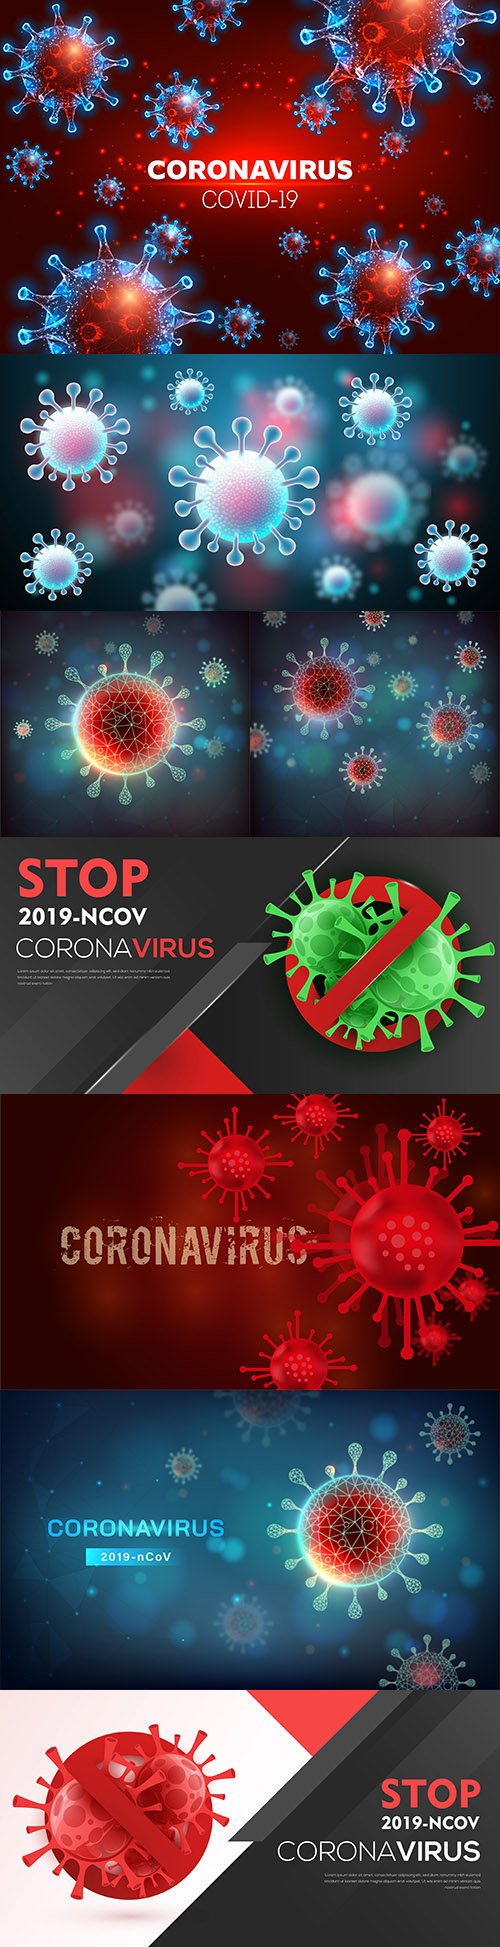 Covid-19 background virus pandemic coronavirus outbreak